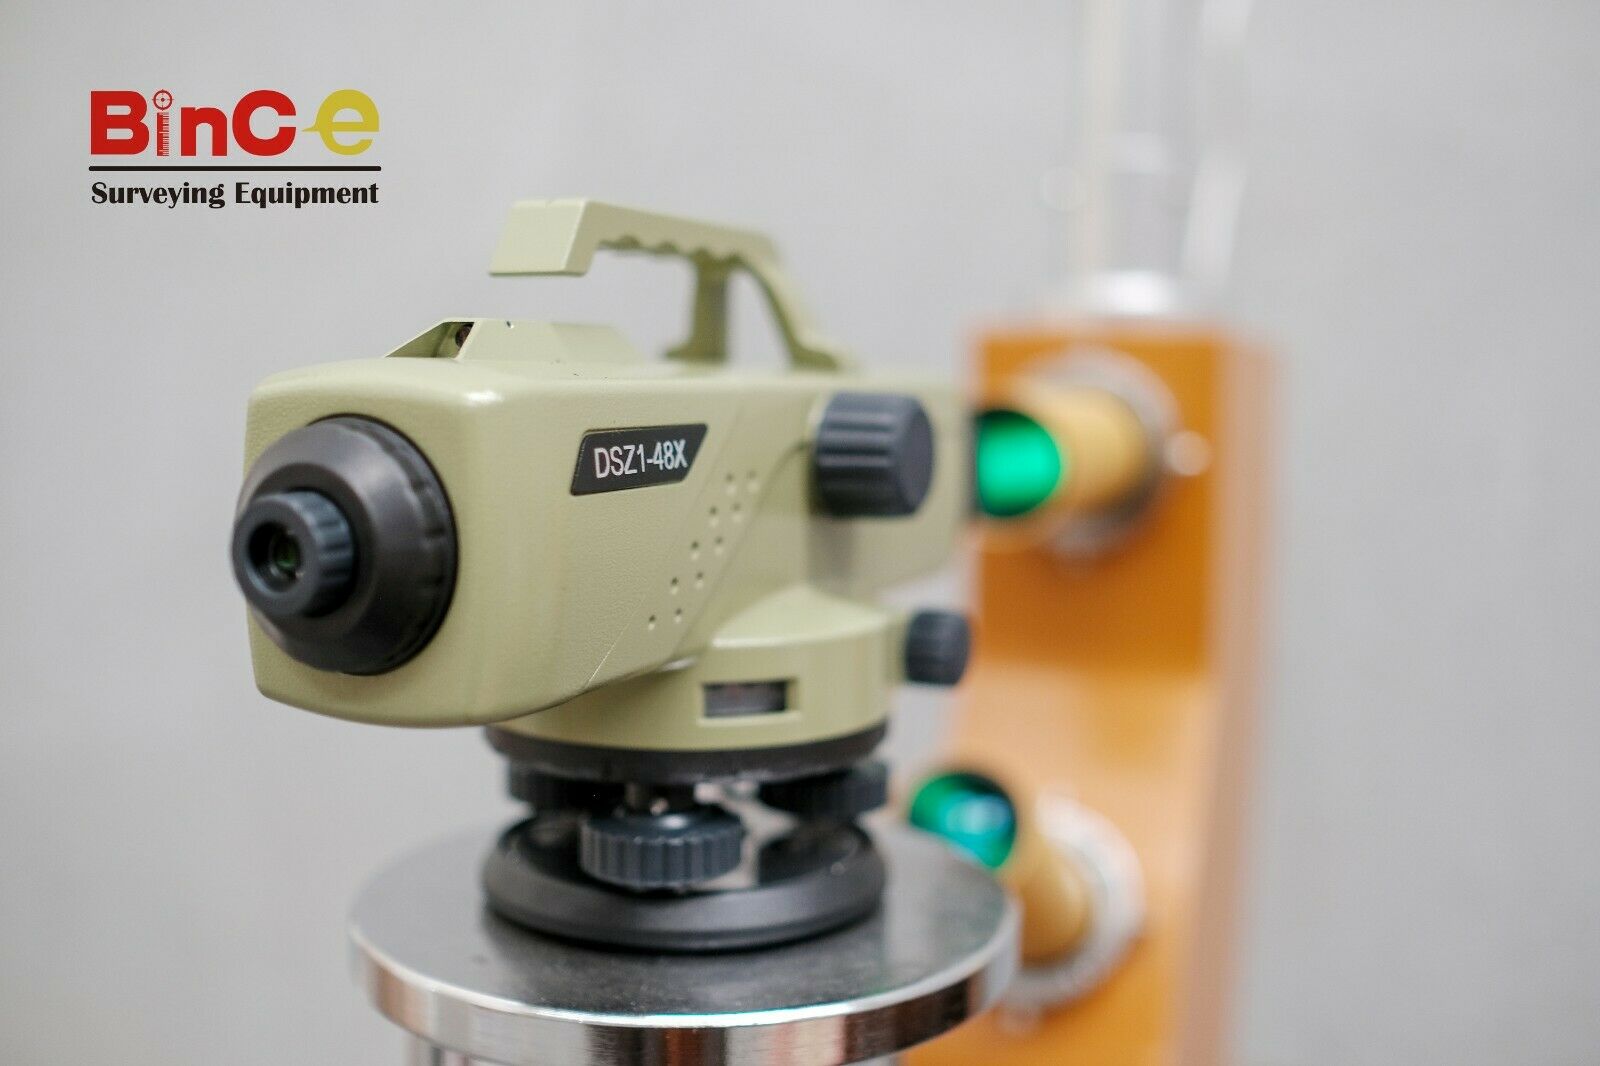 Bince DSZ1-48X Dumpy Level 48X Magnification Optical Automatic Level Calibrated